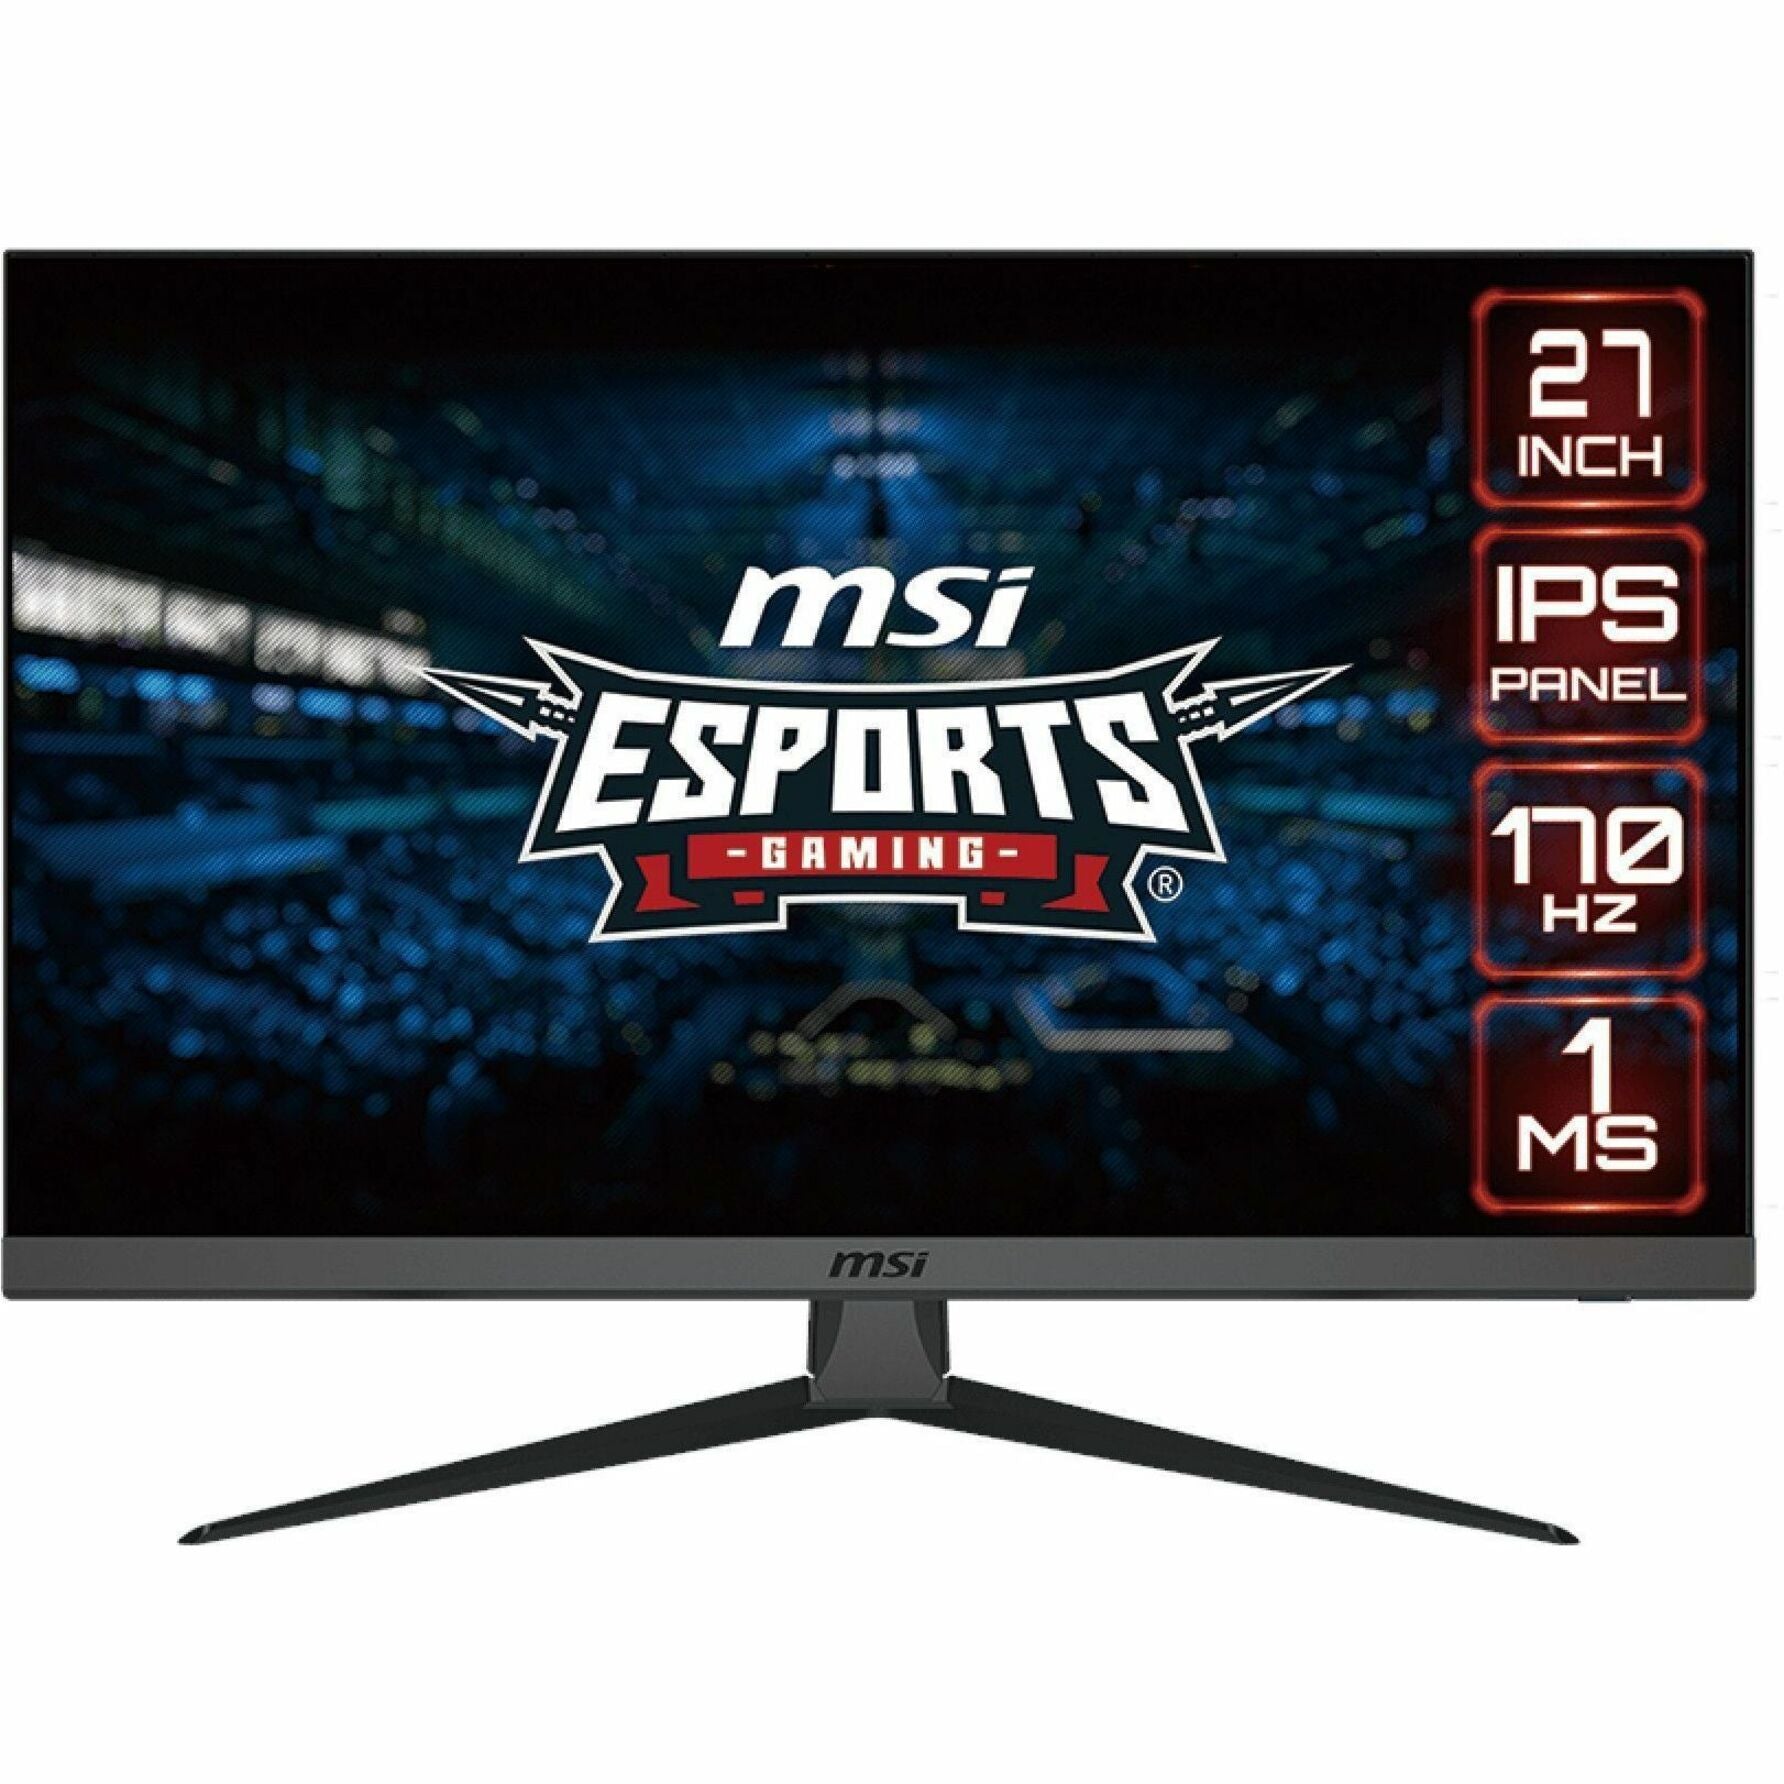 MSI G2722 Gaming LED Monitor, 27" Full HD, 170Hz Refresh Rate, FreeSync Premium